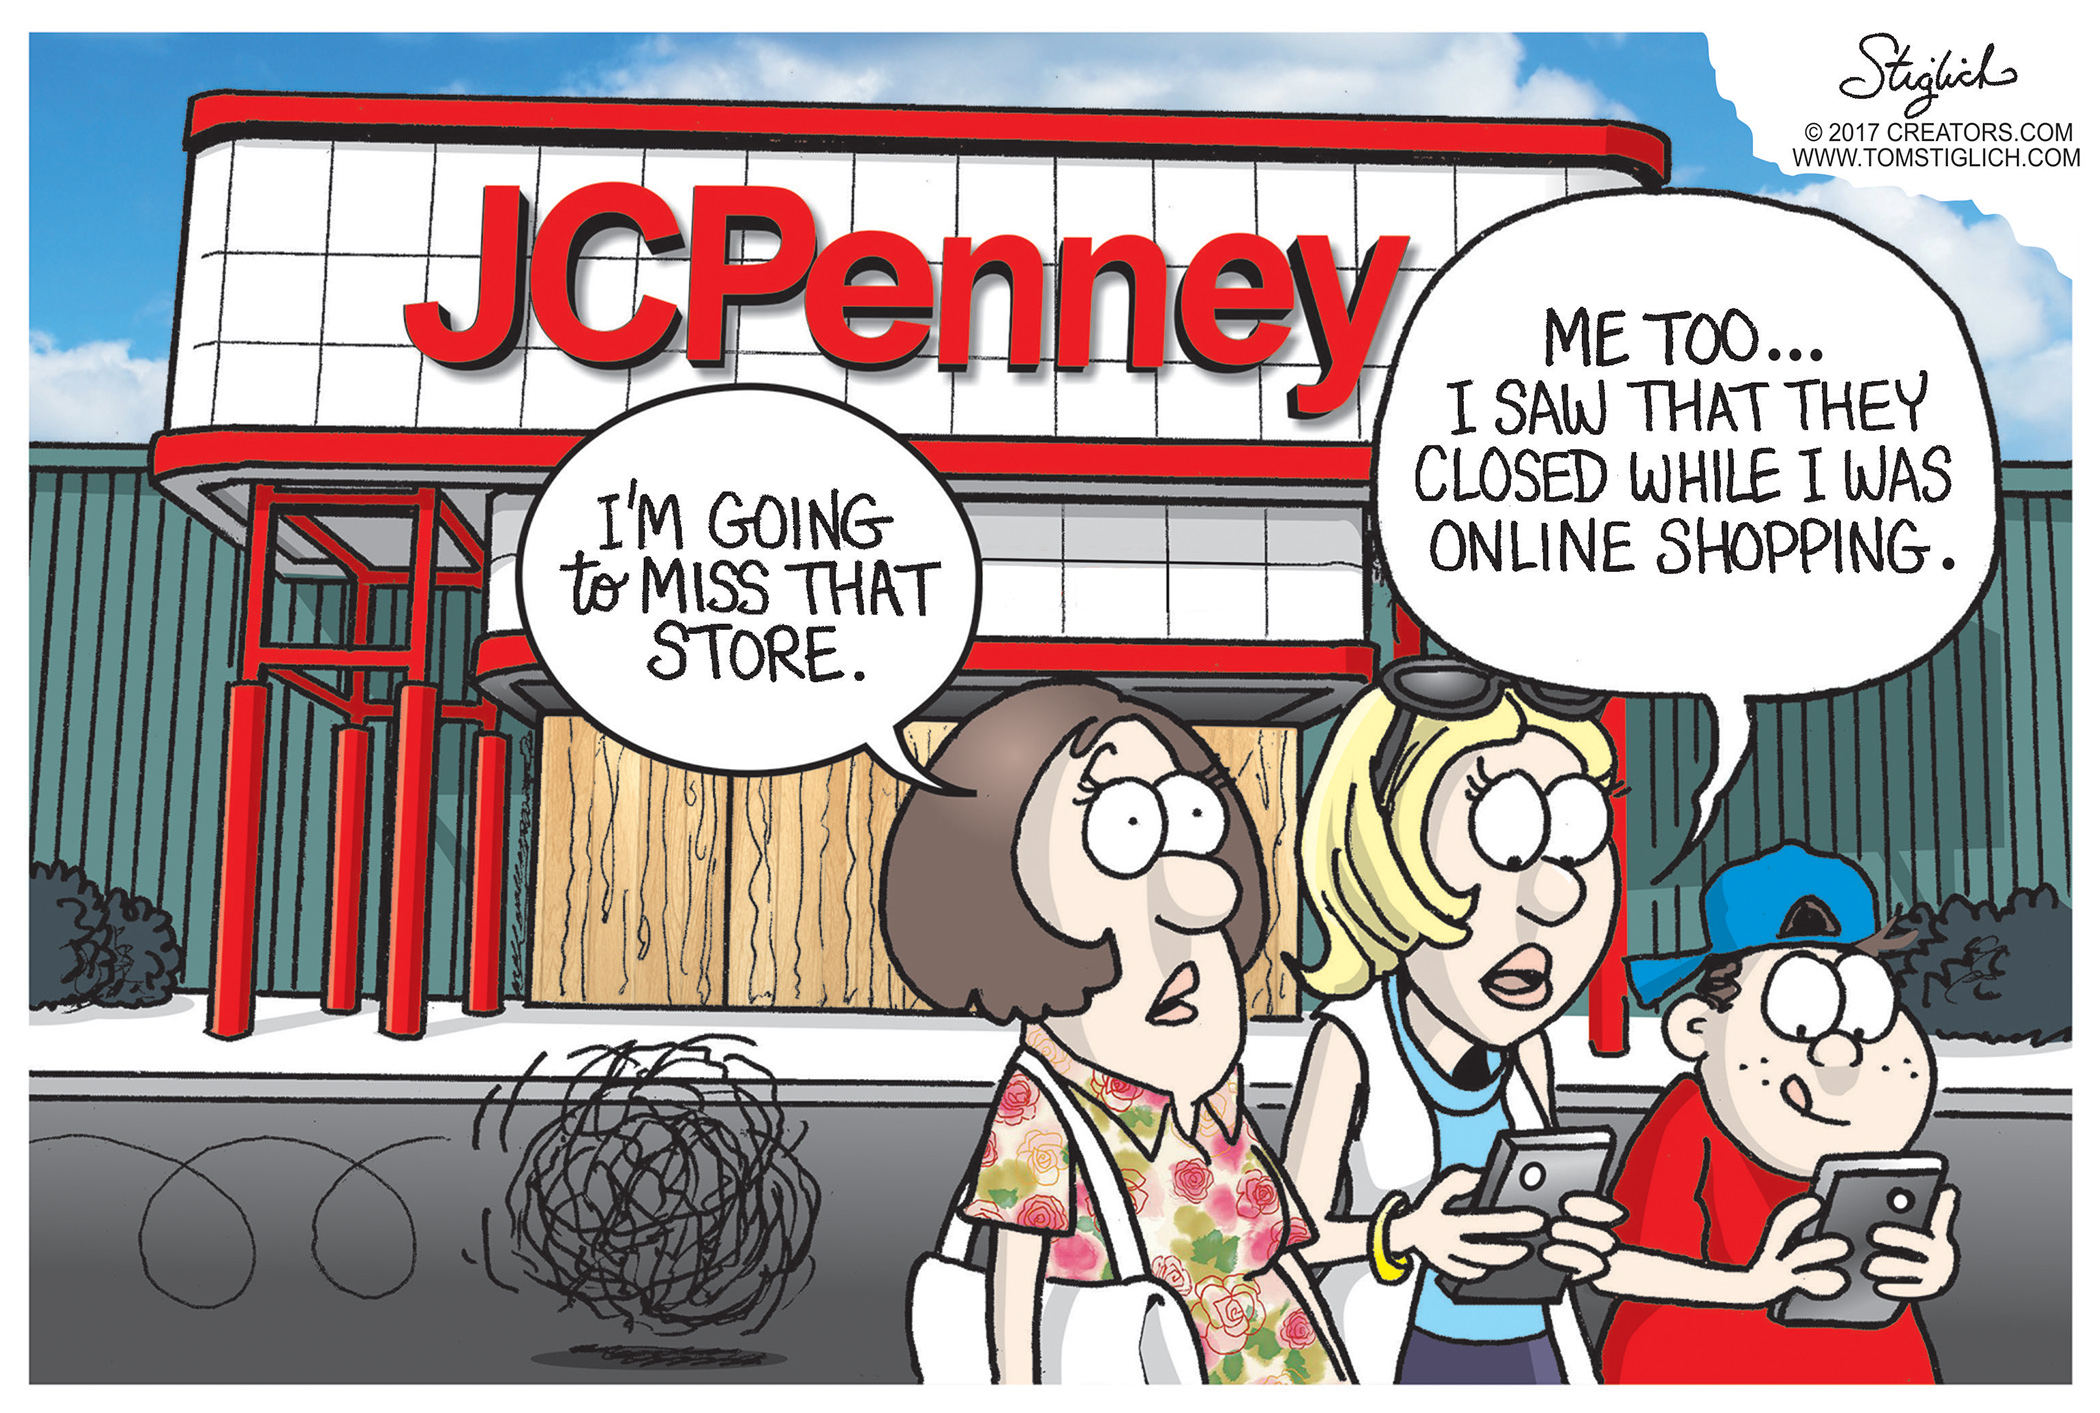 Political cartoon . JC Penney store closing Amazon online shopping